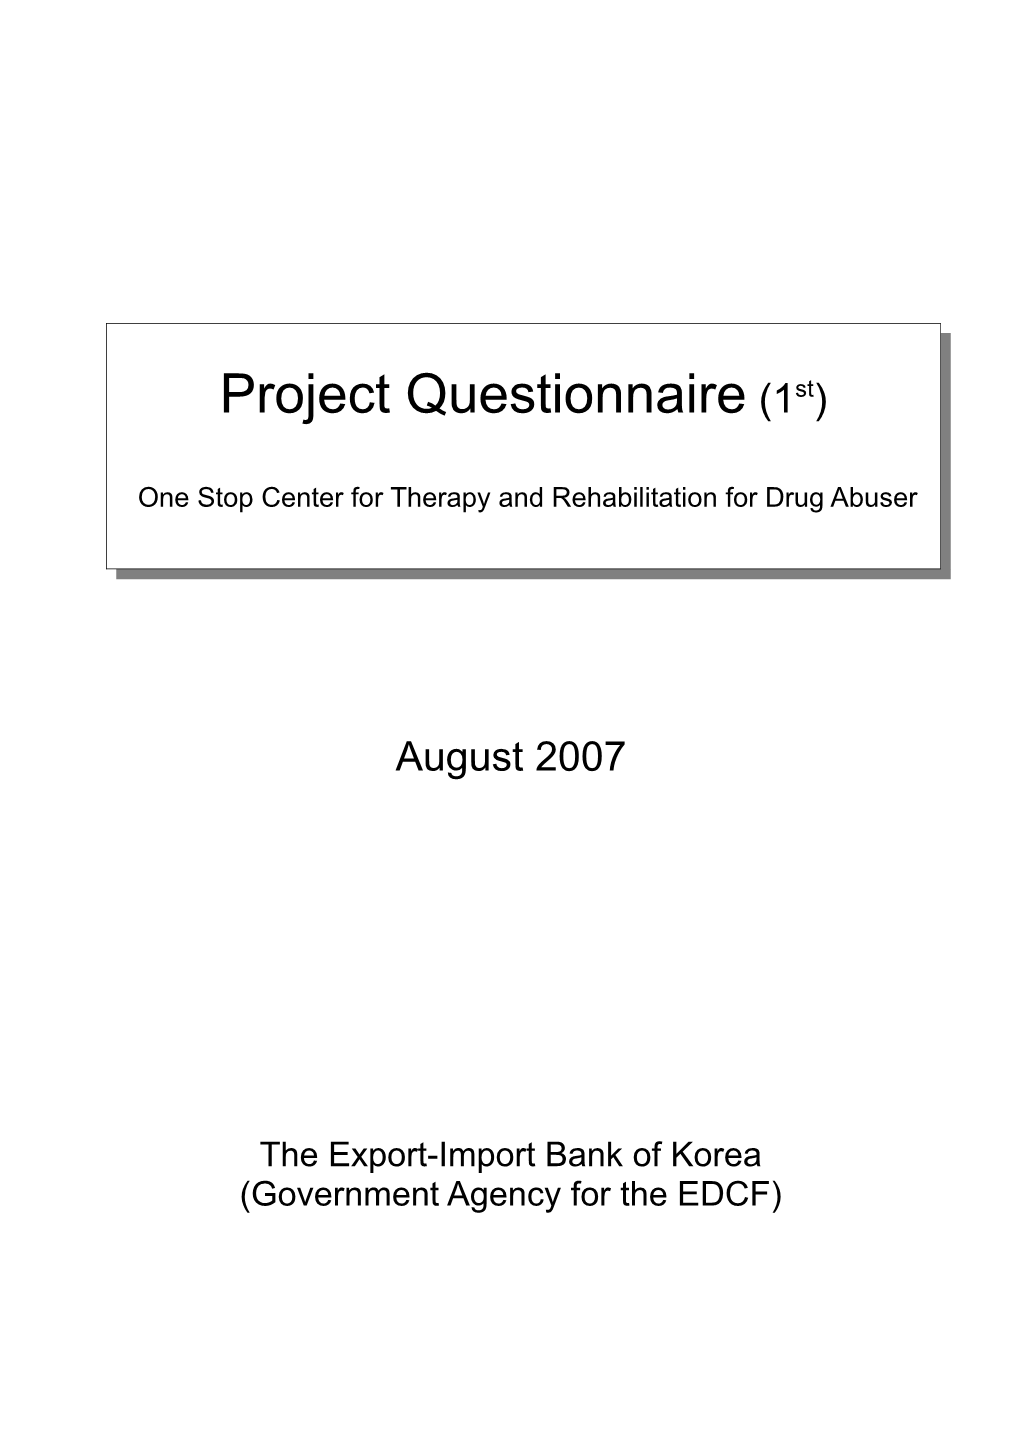 The Export-Import Bank of Korea